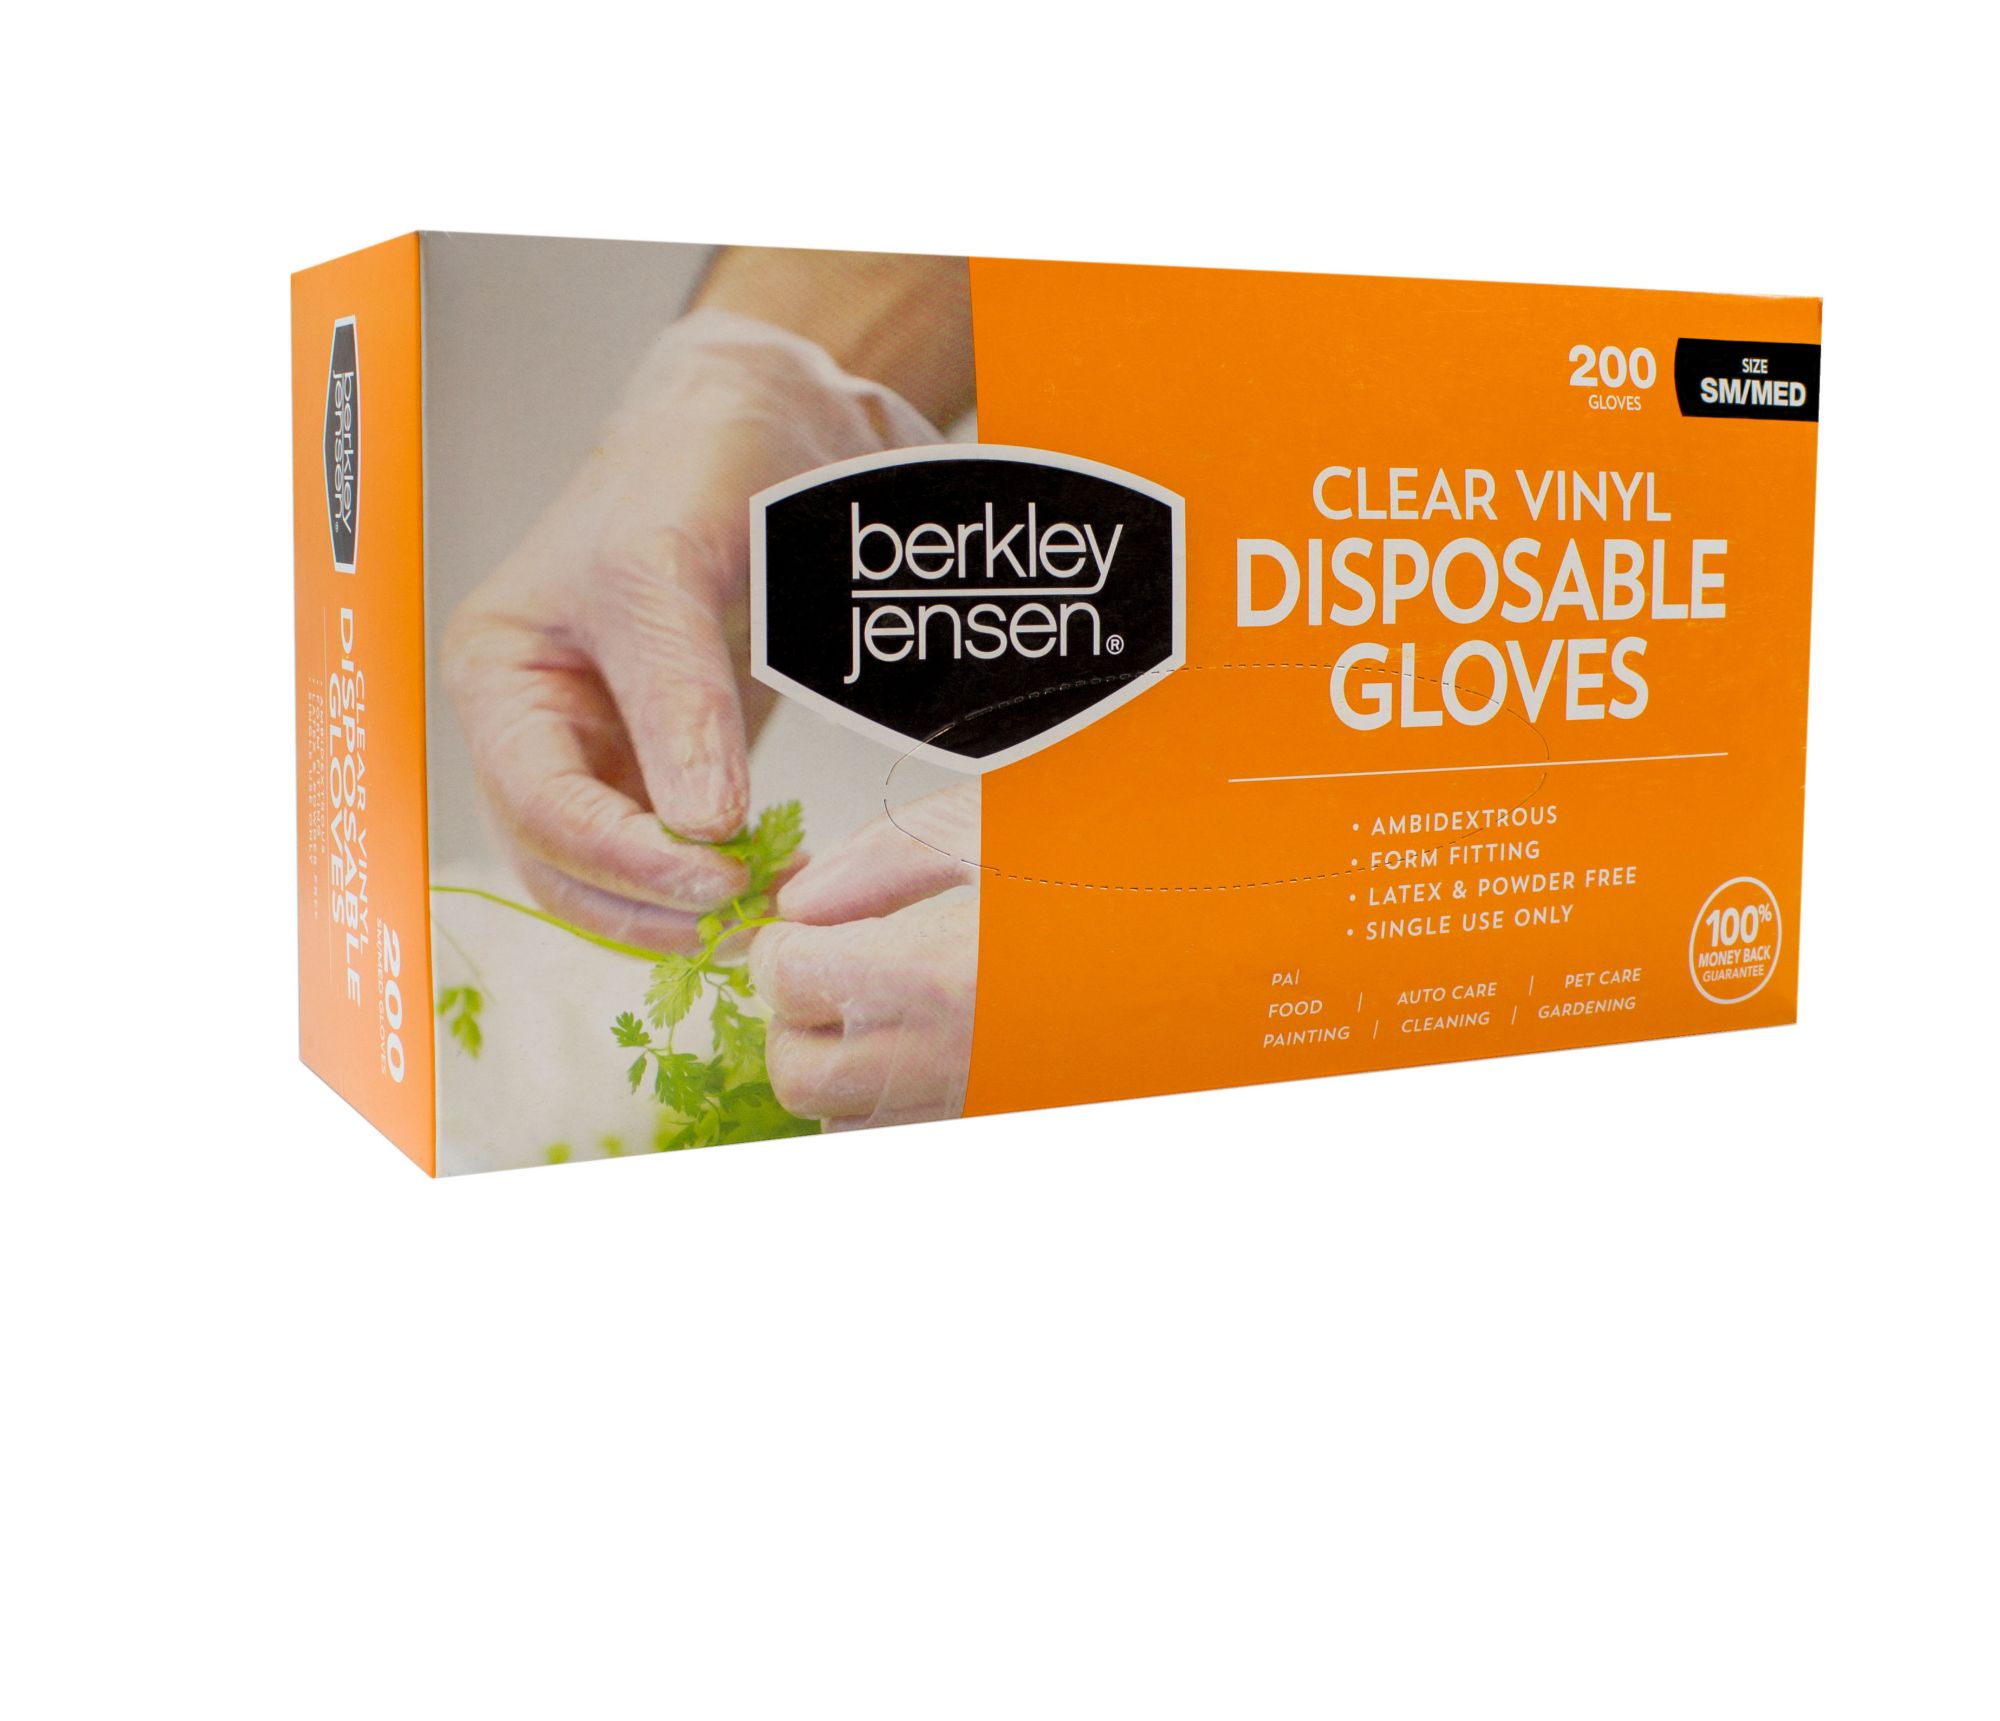 Berkley Jensen Sm/Med Disposable Gloves, 200 ct.